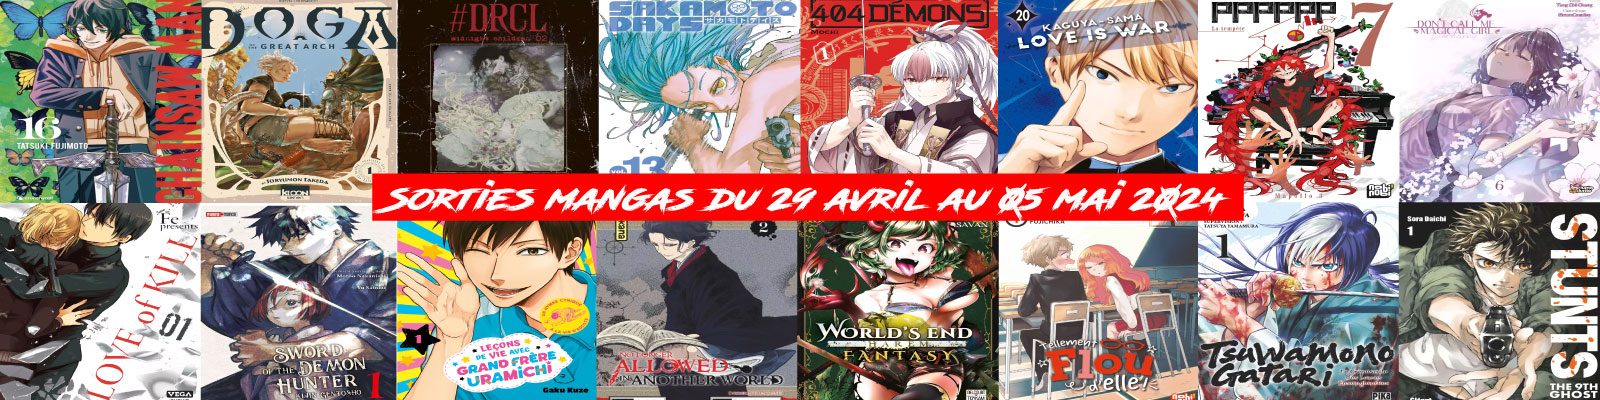 Sorties mangas-du-29-avril-au-05-mai-2024-2